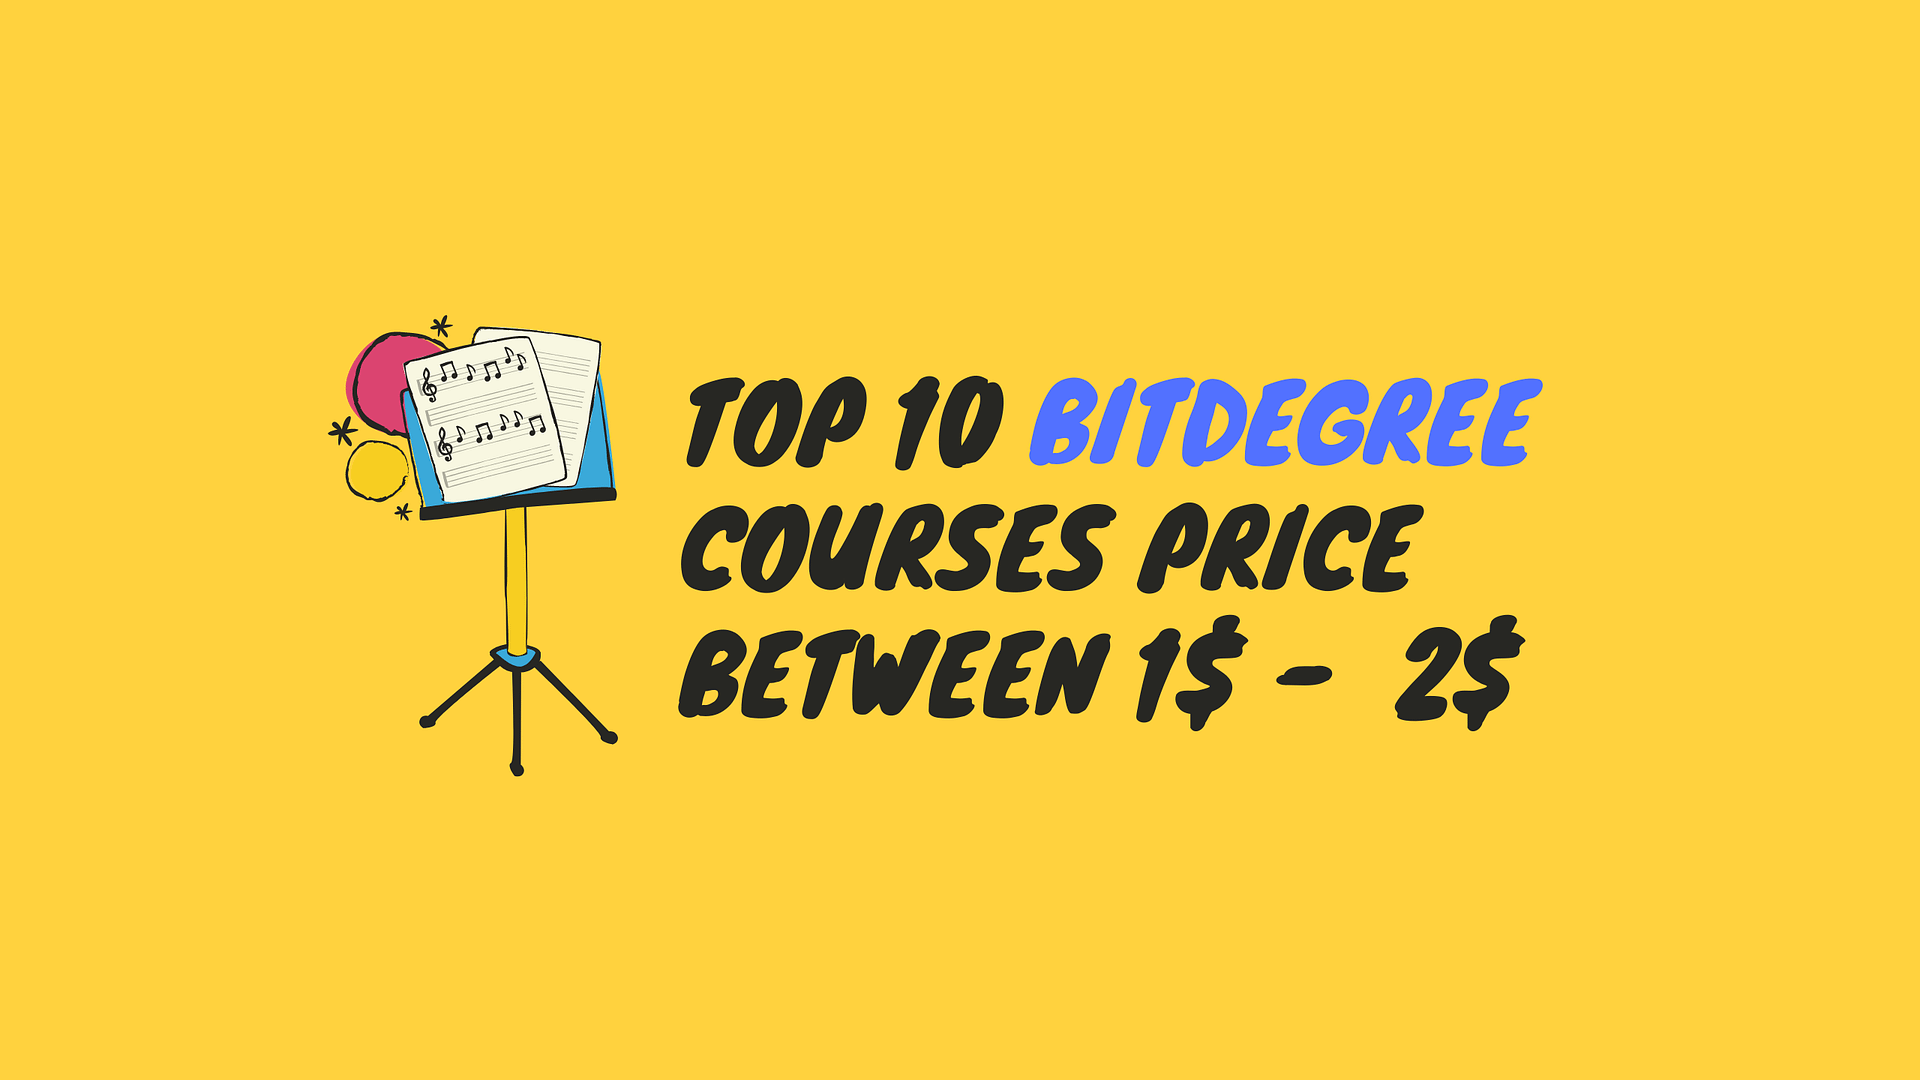 Top 10 BitDegree courses Price Min 1$ and Max 2$